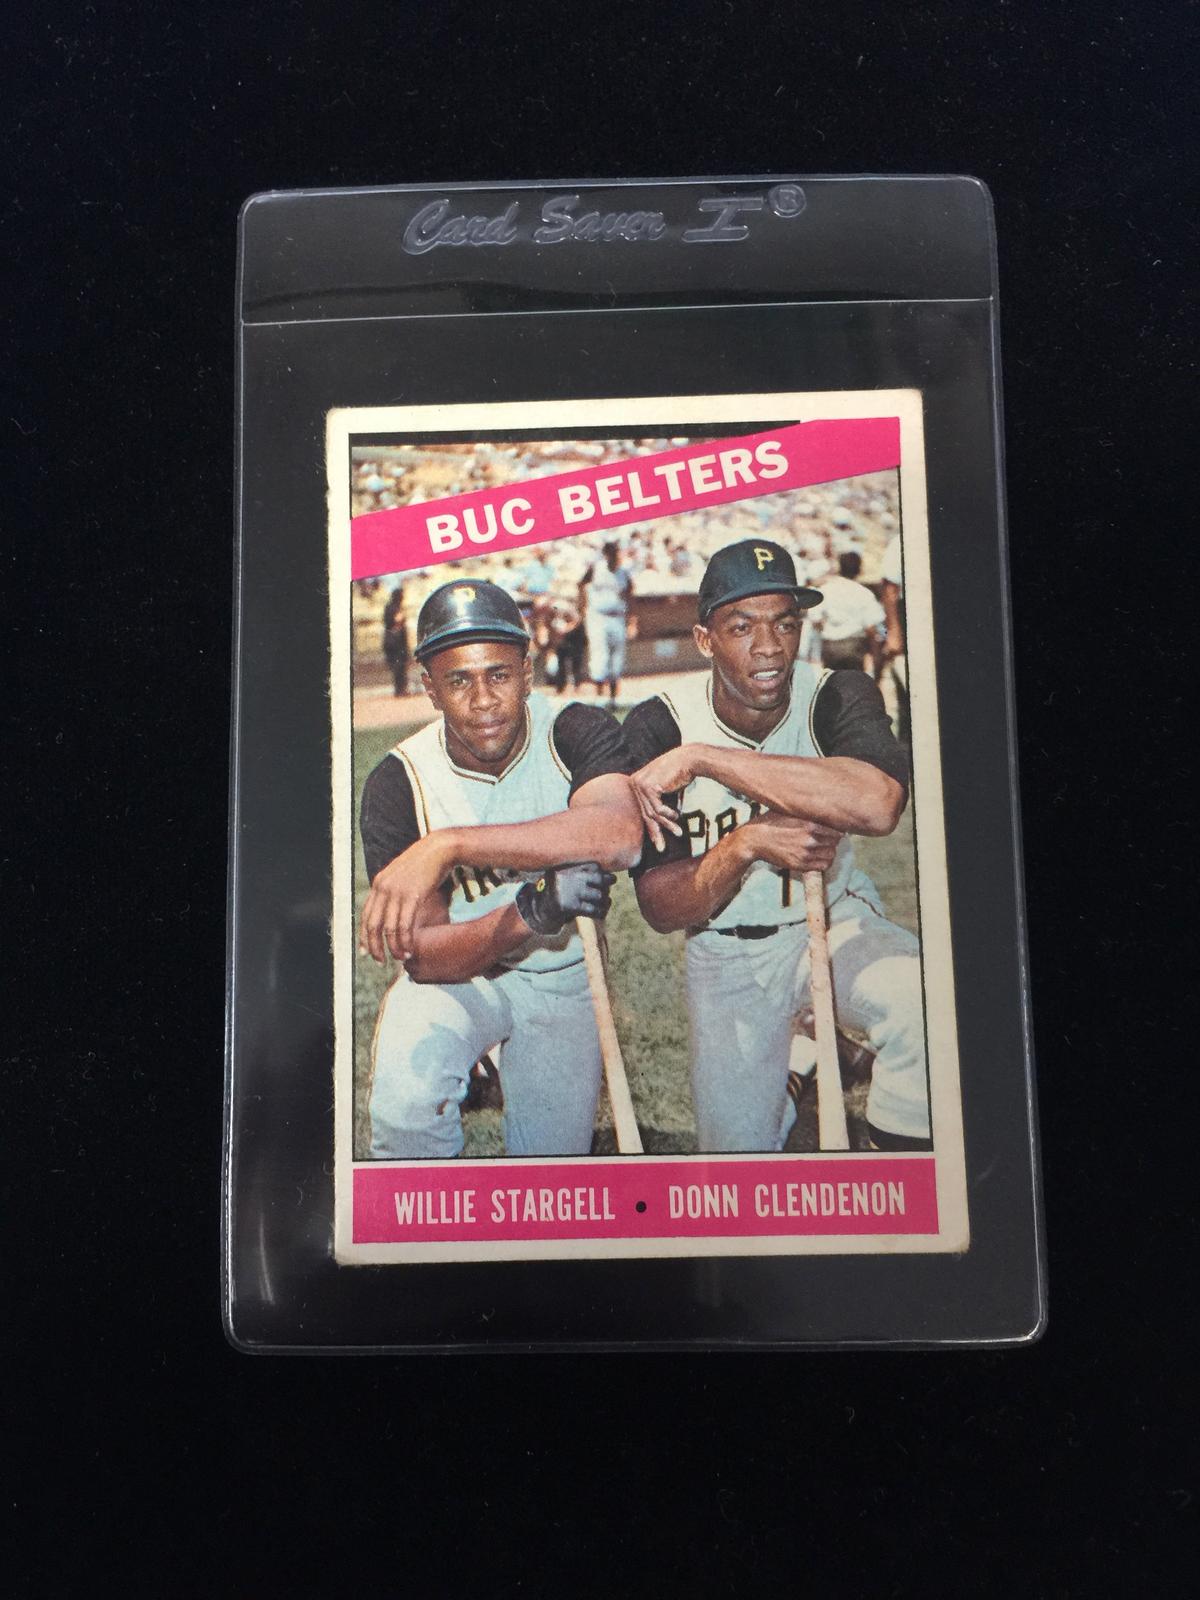 1966 Topps #99 Buc Belters - Willie Stargell Baseball Card